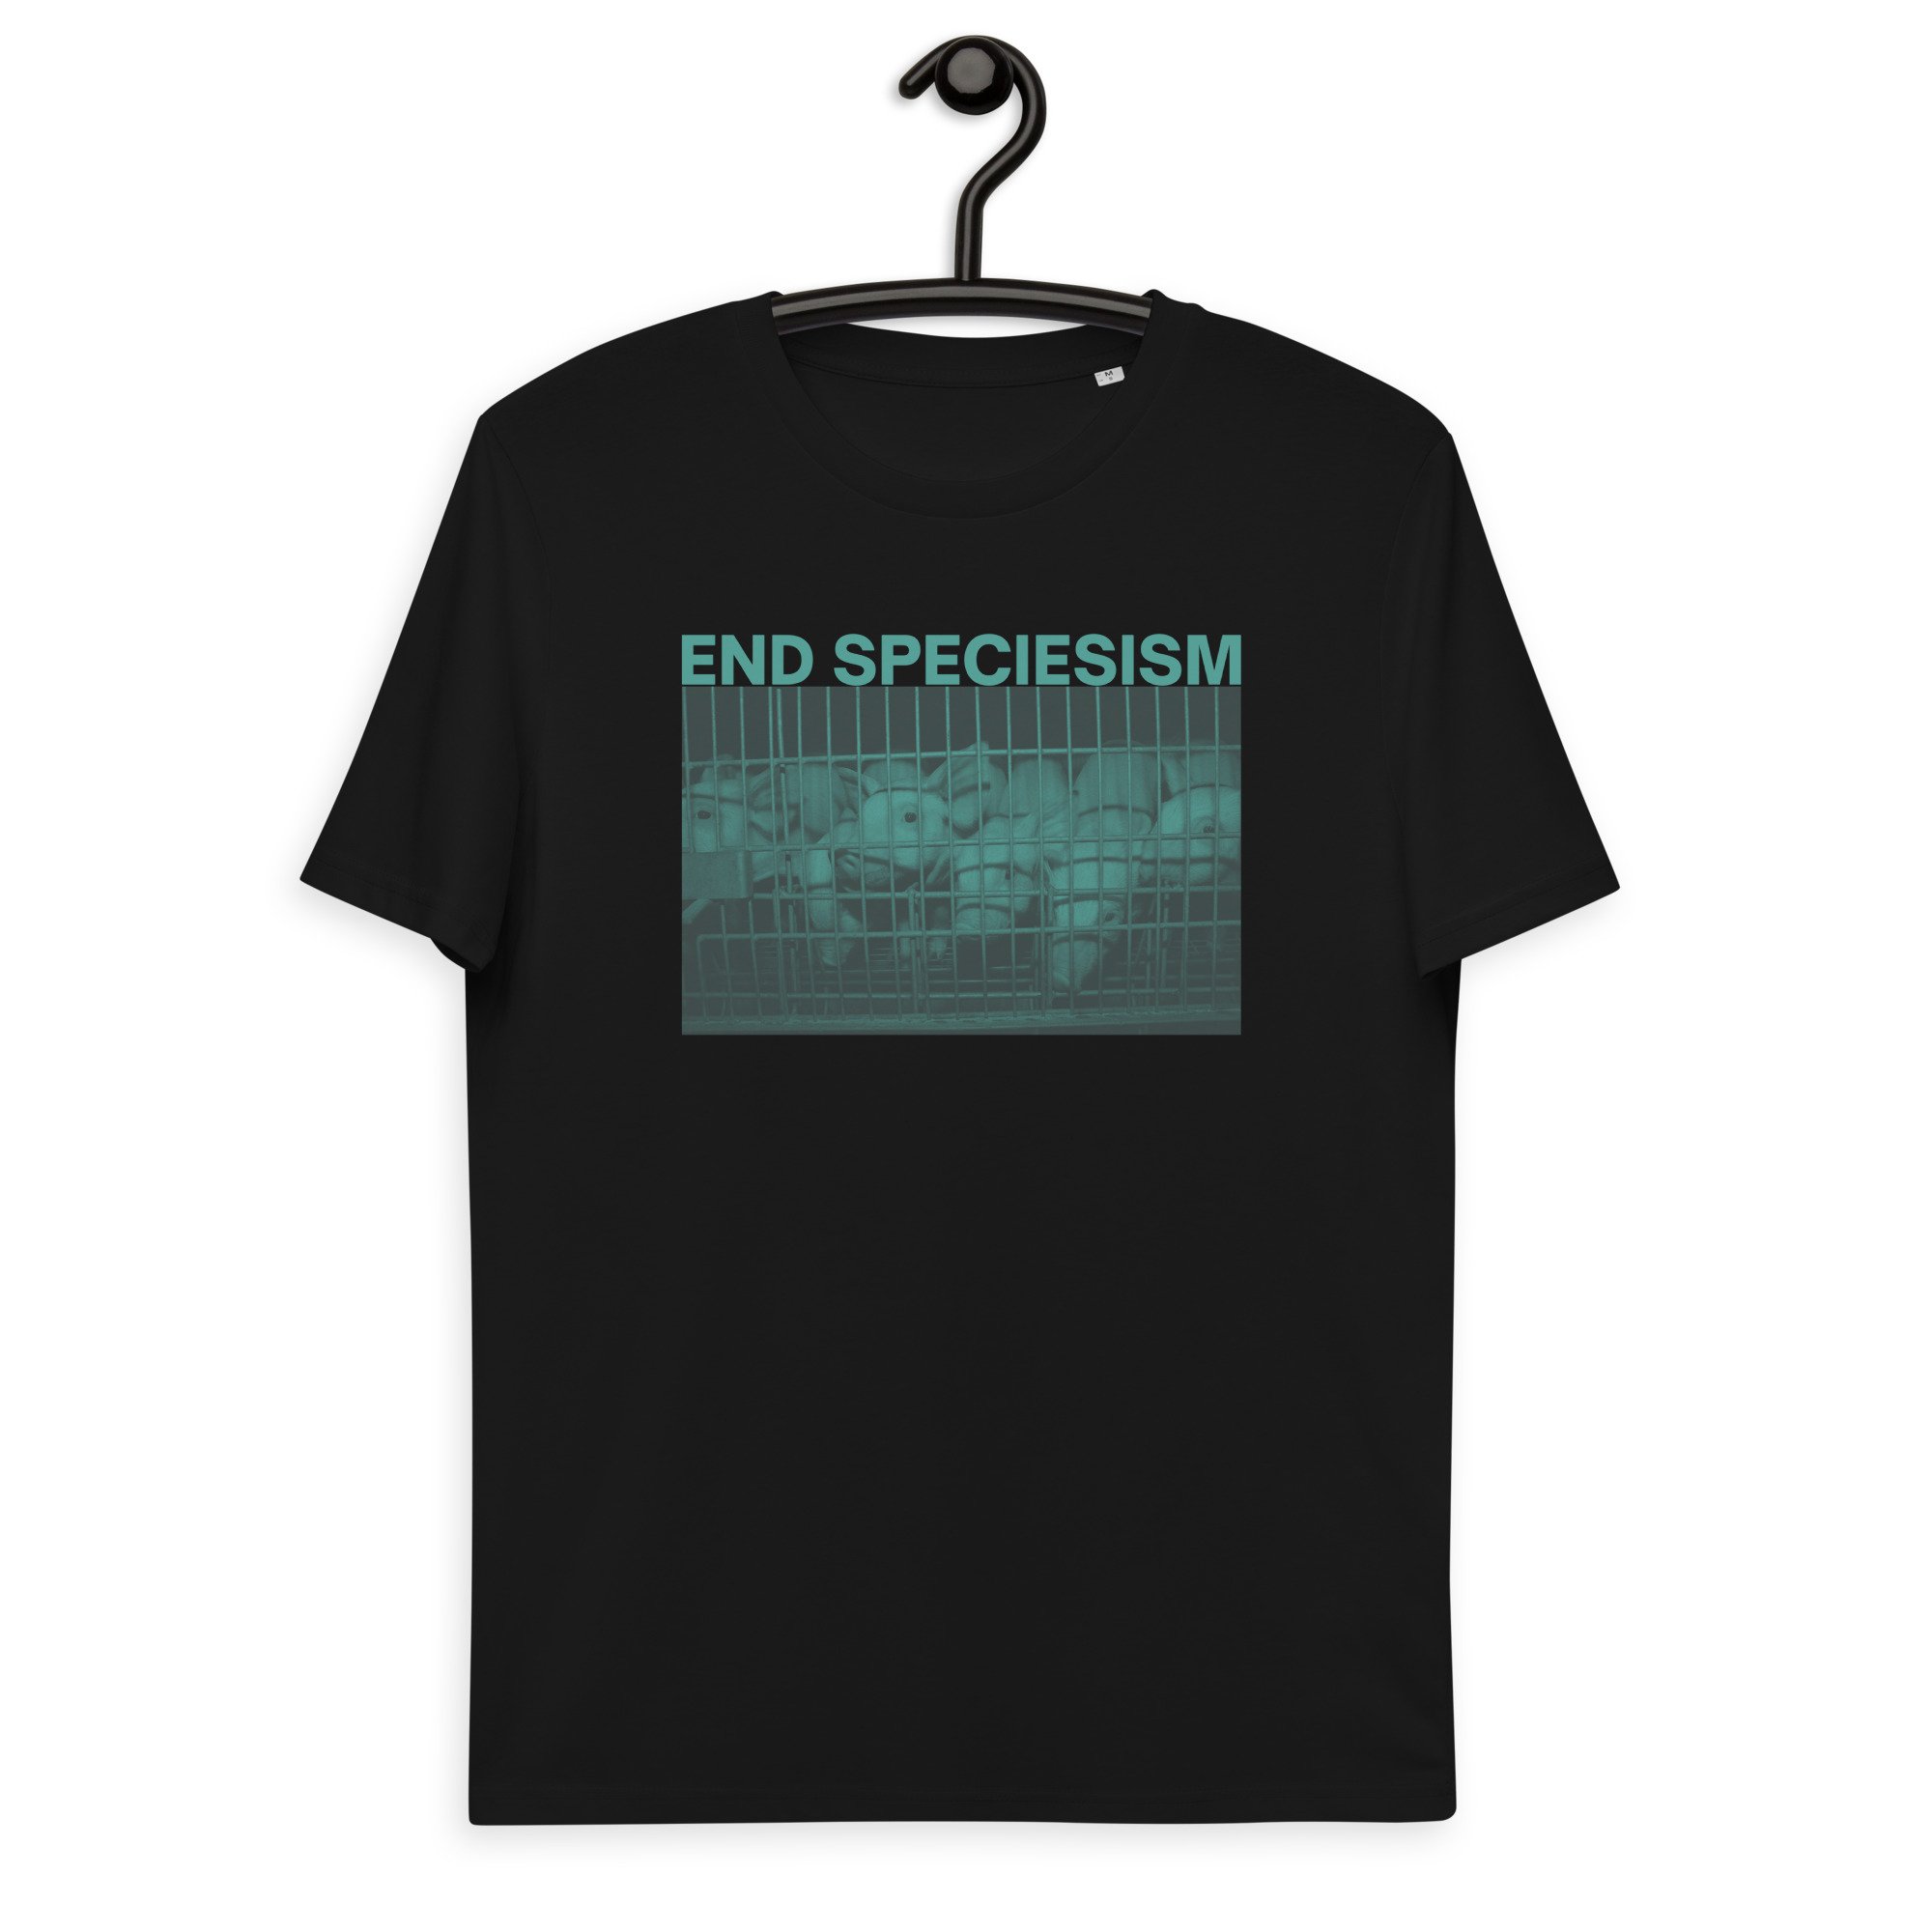 'End speciesism' eco t-shirt, with DA colours